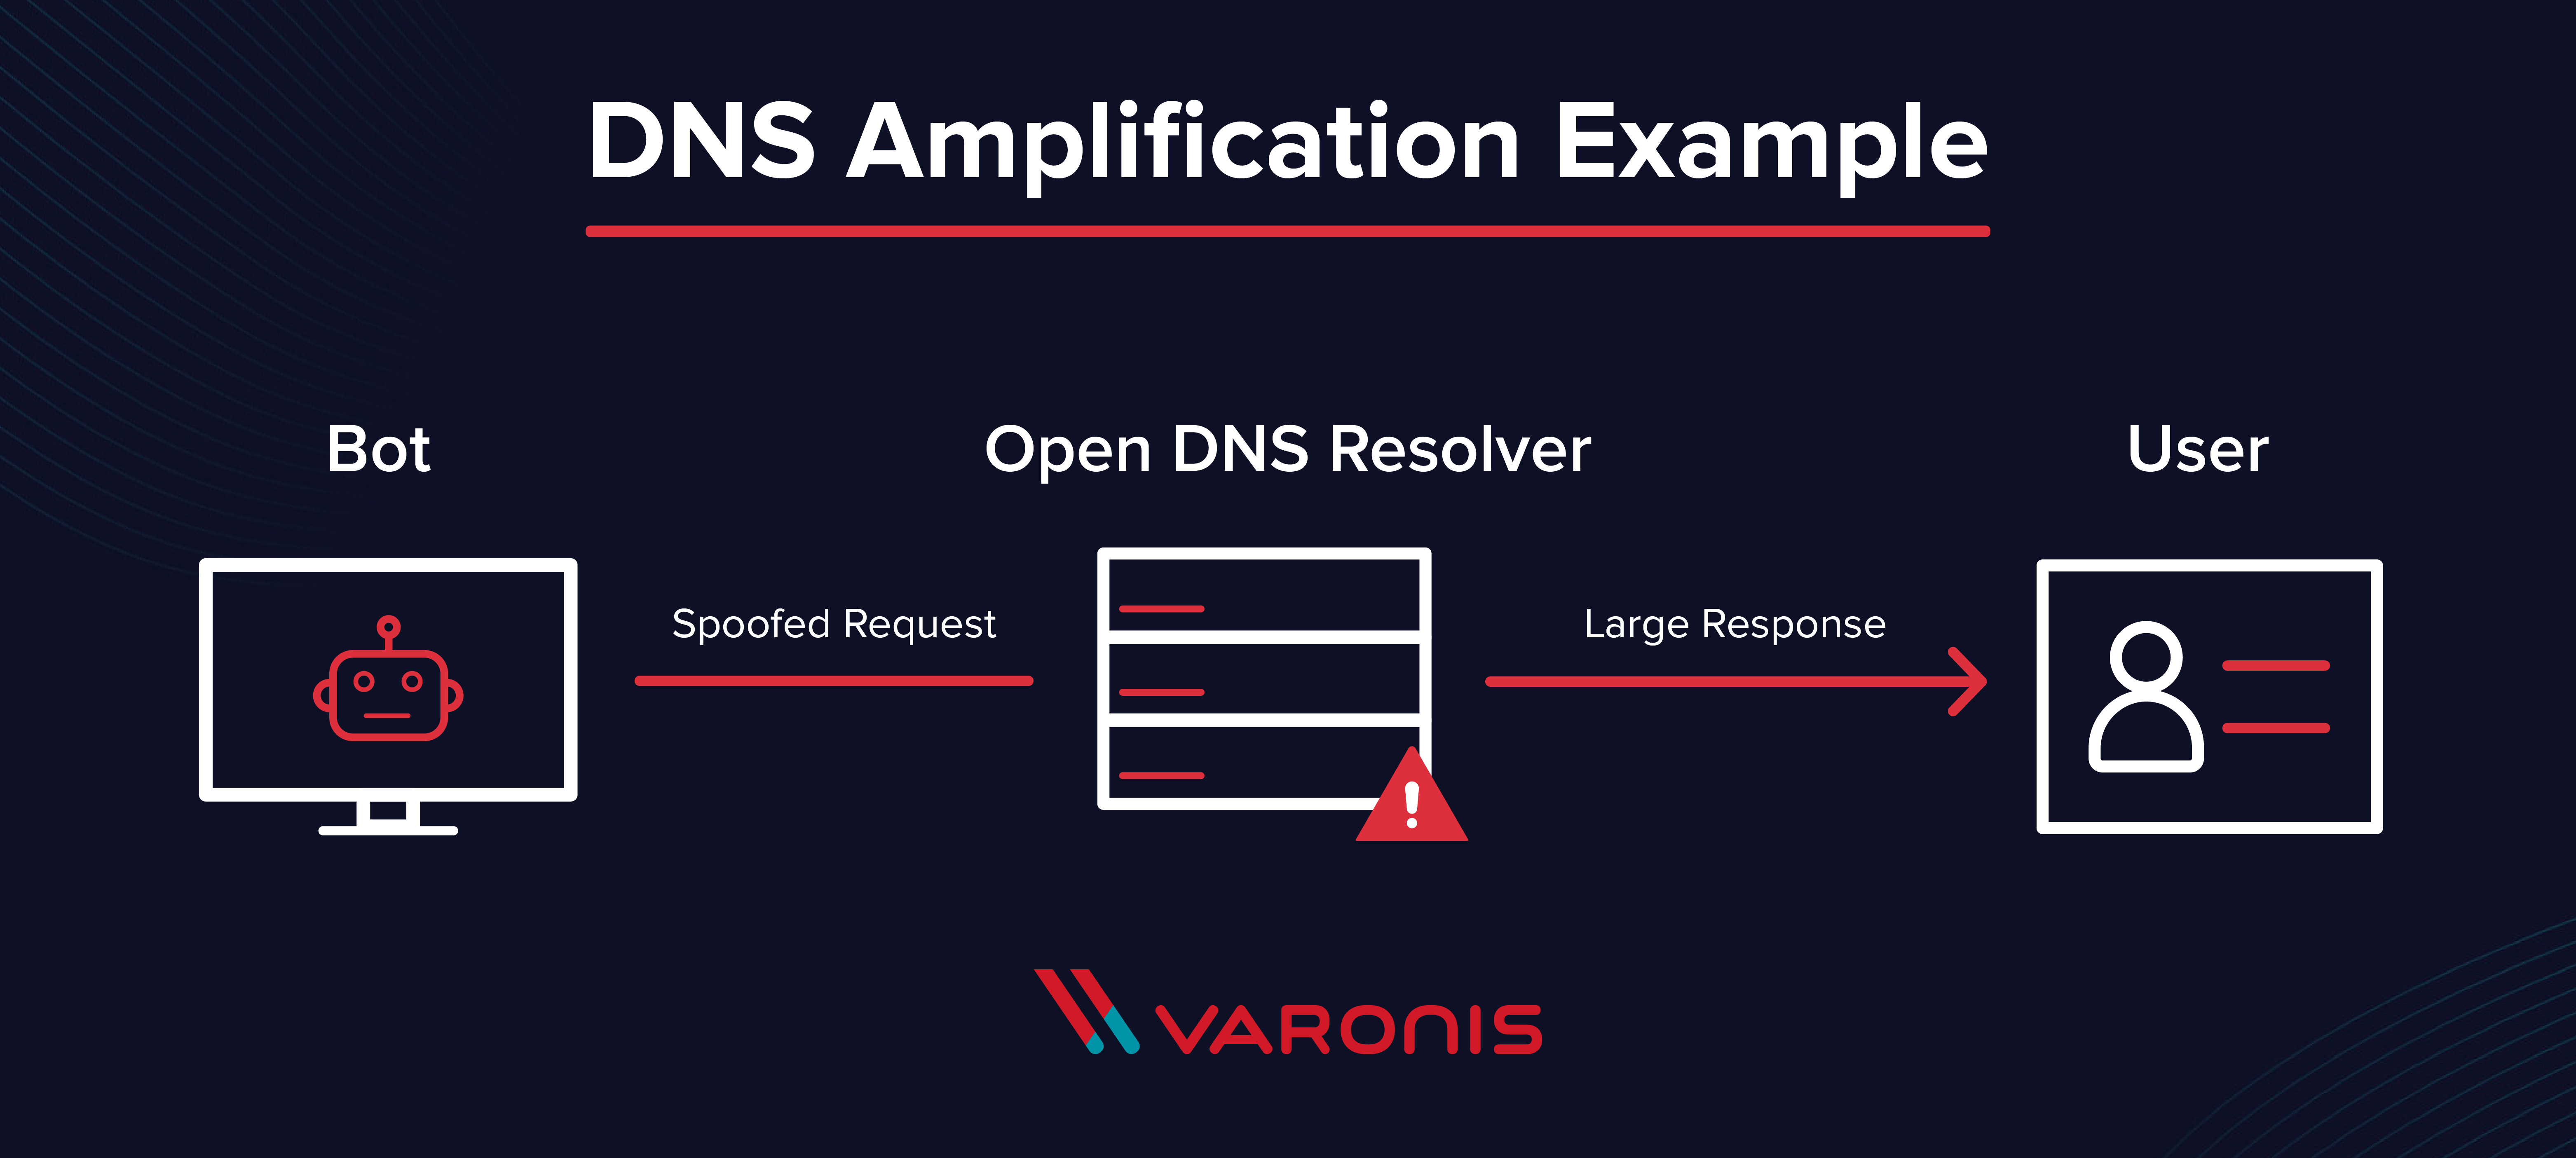 DNS Amplification Example DDoS